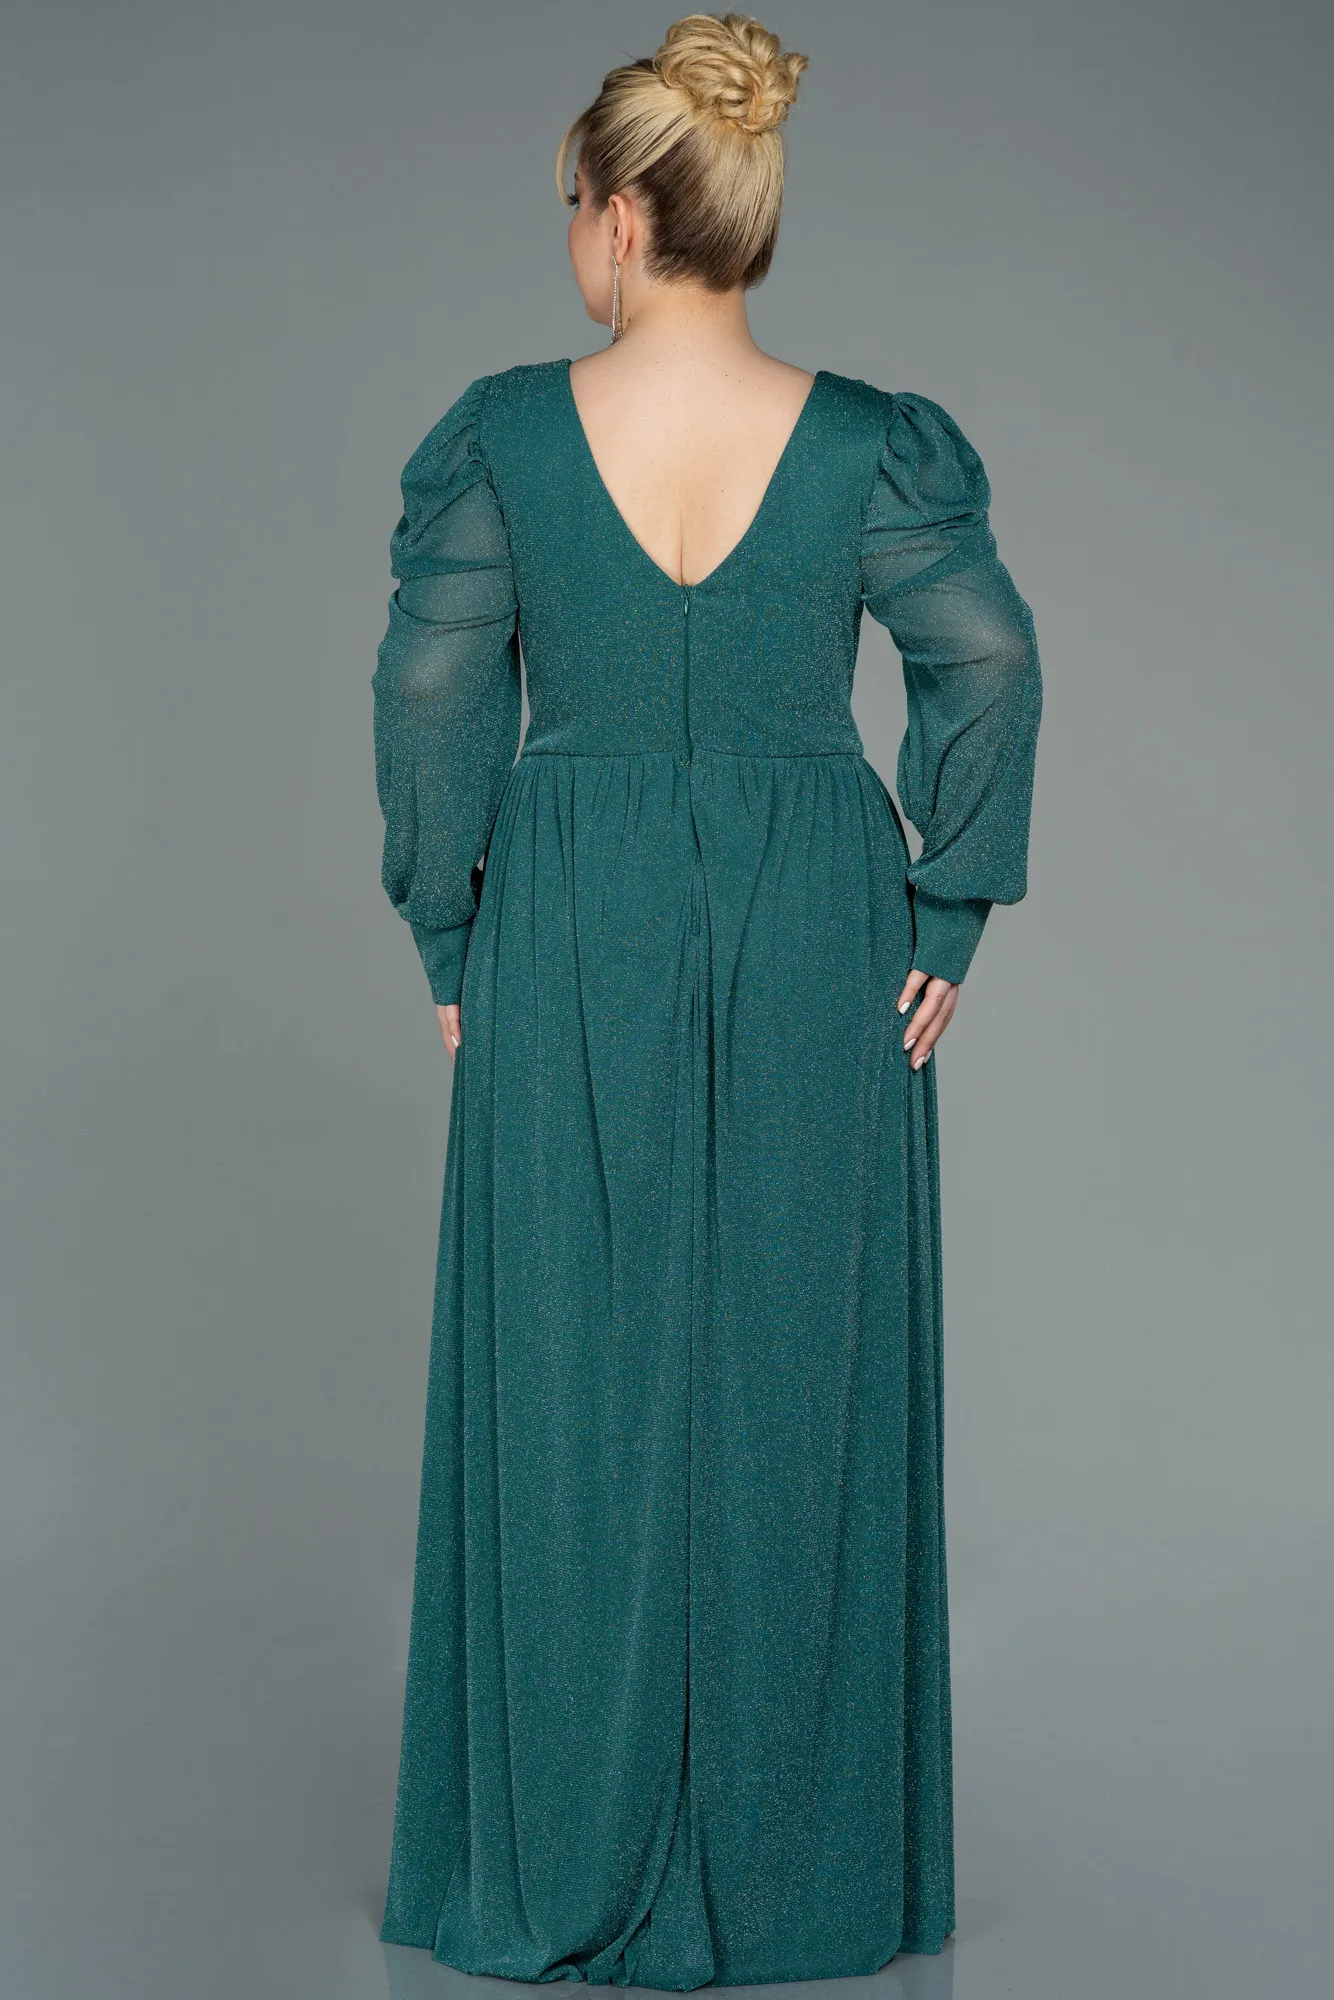 Emerald Green-Long Plus Size Evening Dress ABU3104